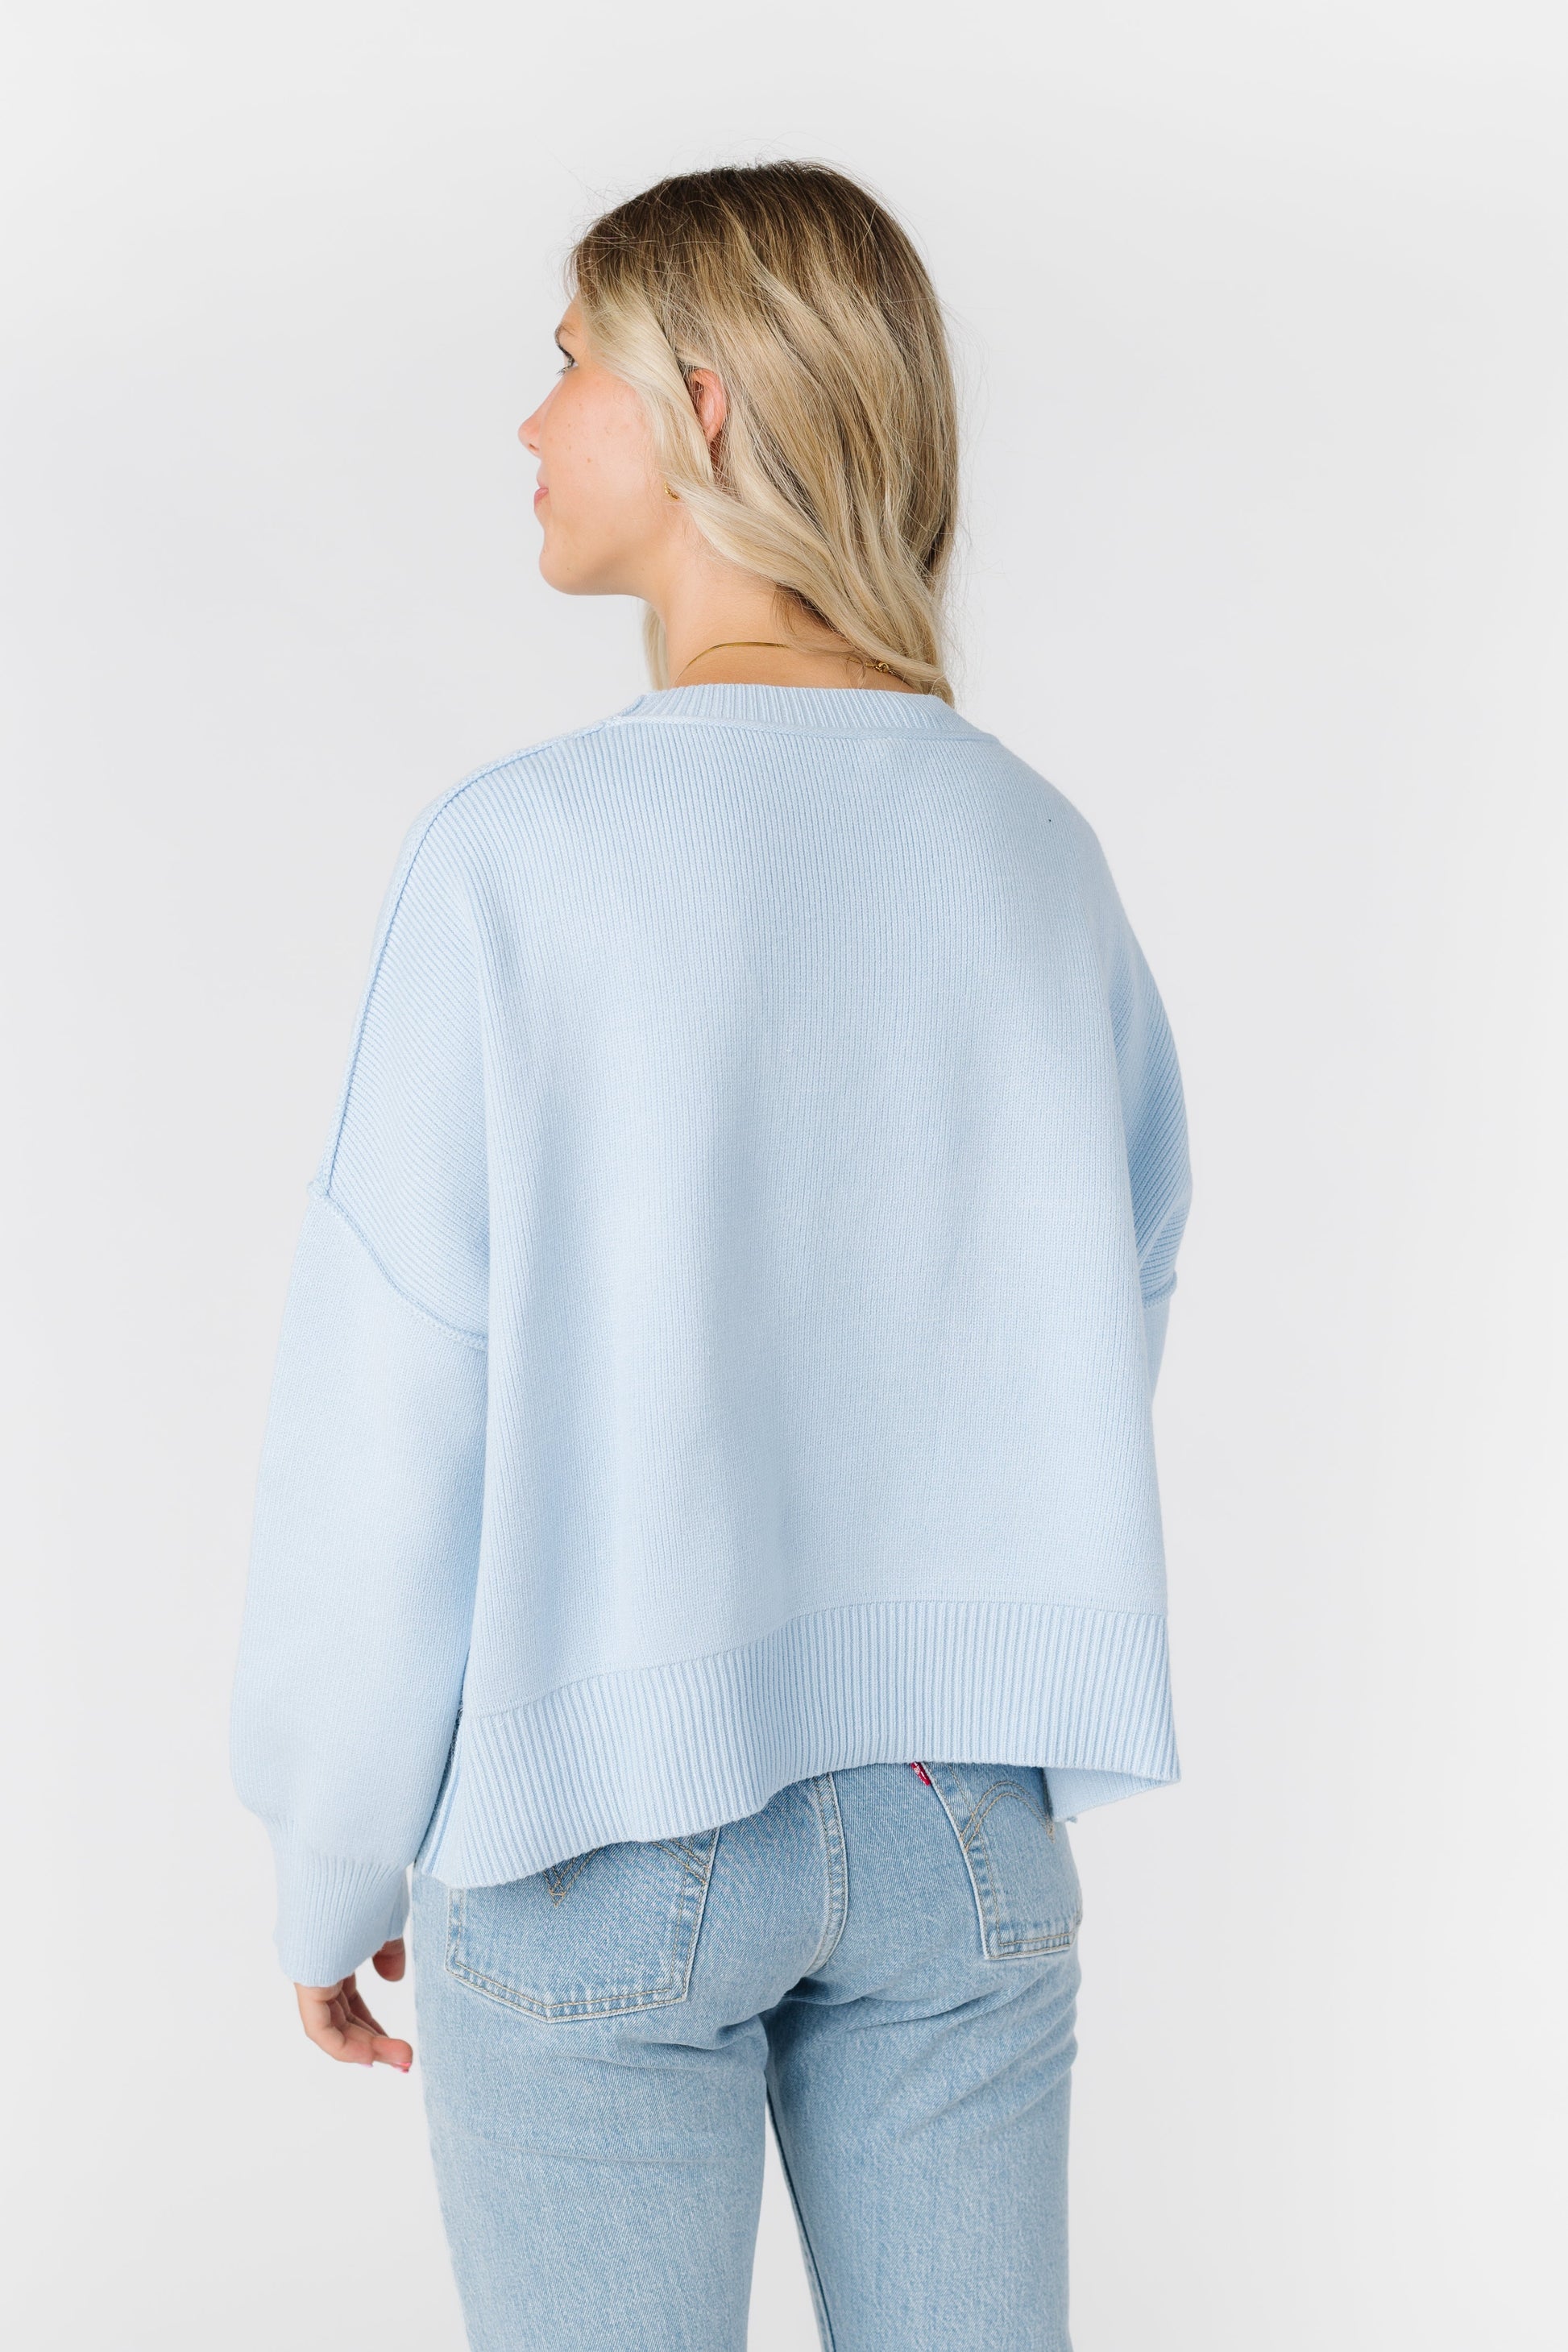 Sweater Time Sweater WOMEN'S SWEATERS Wishlist 